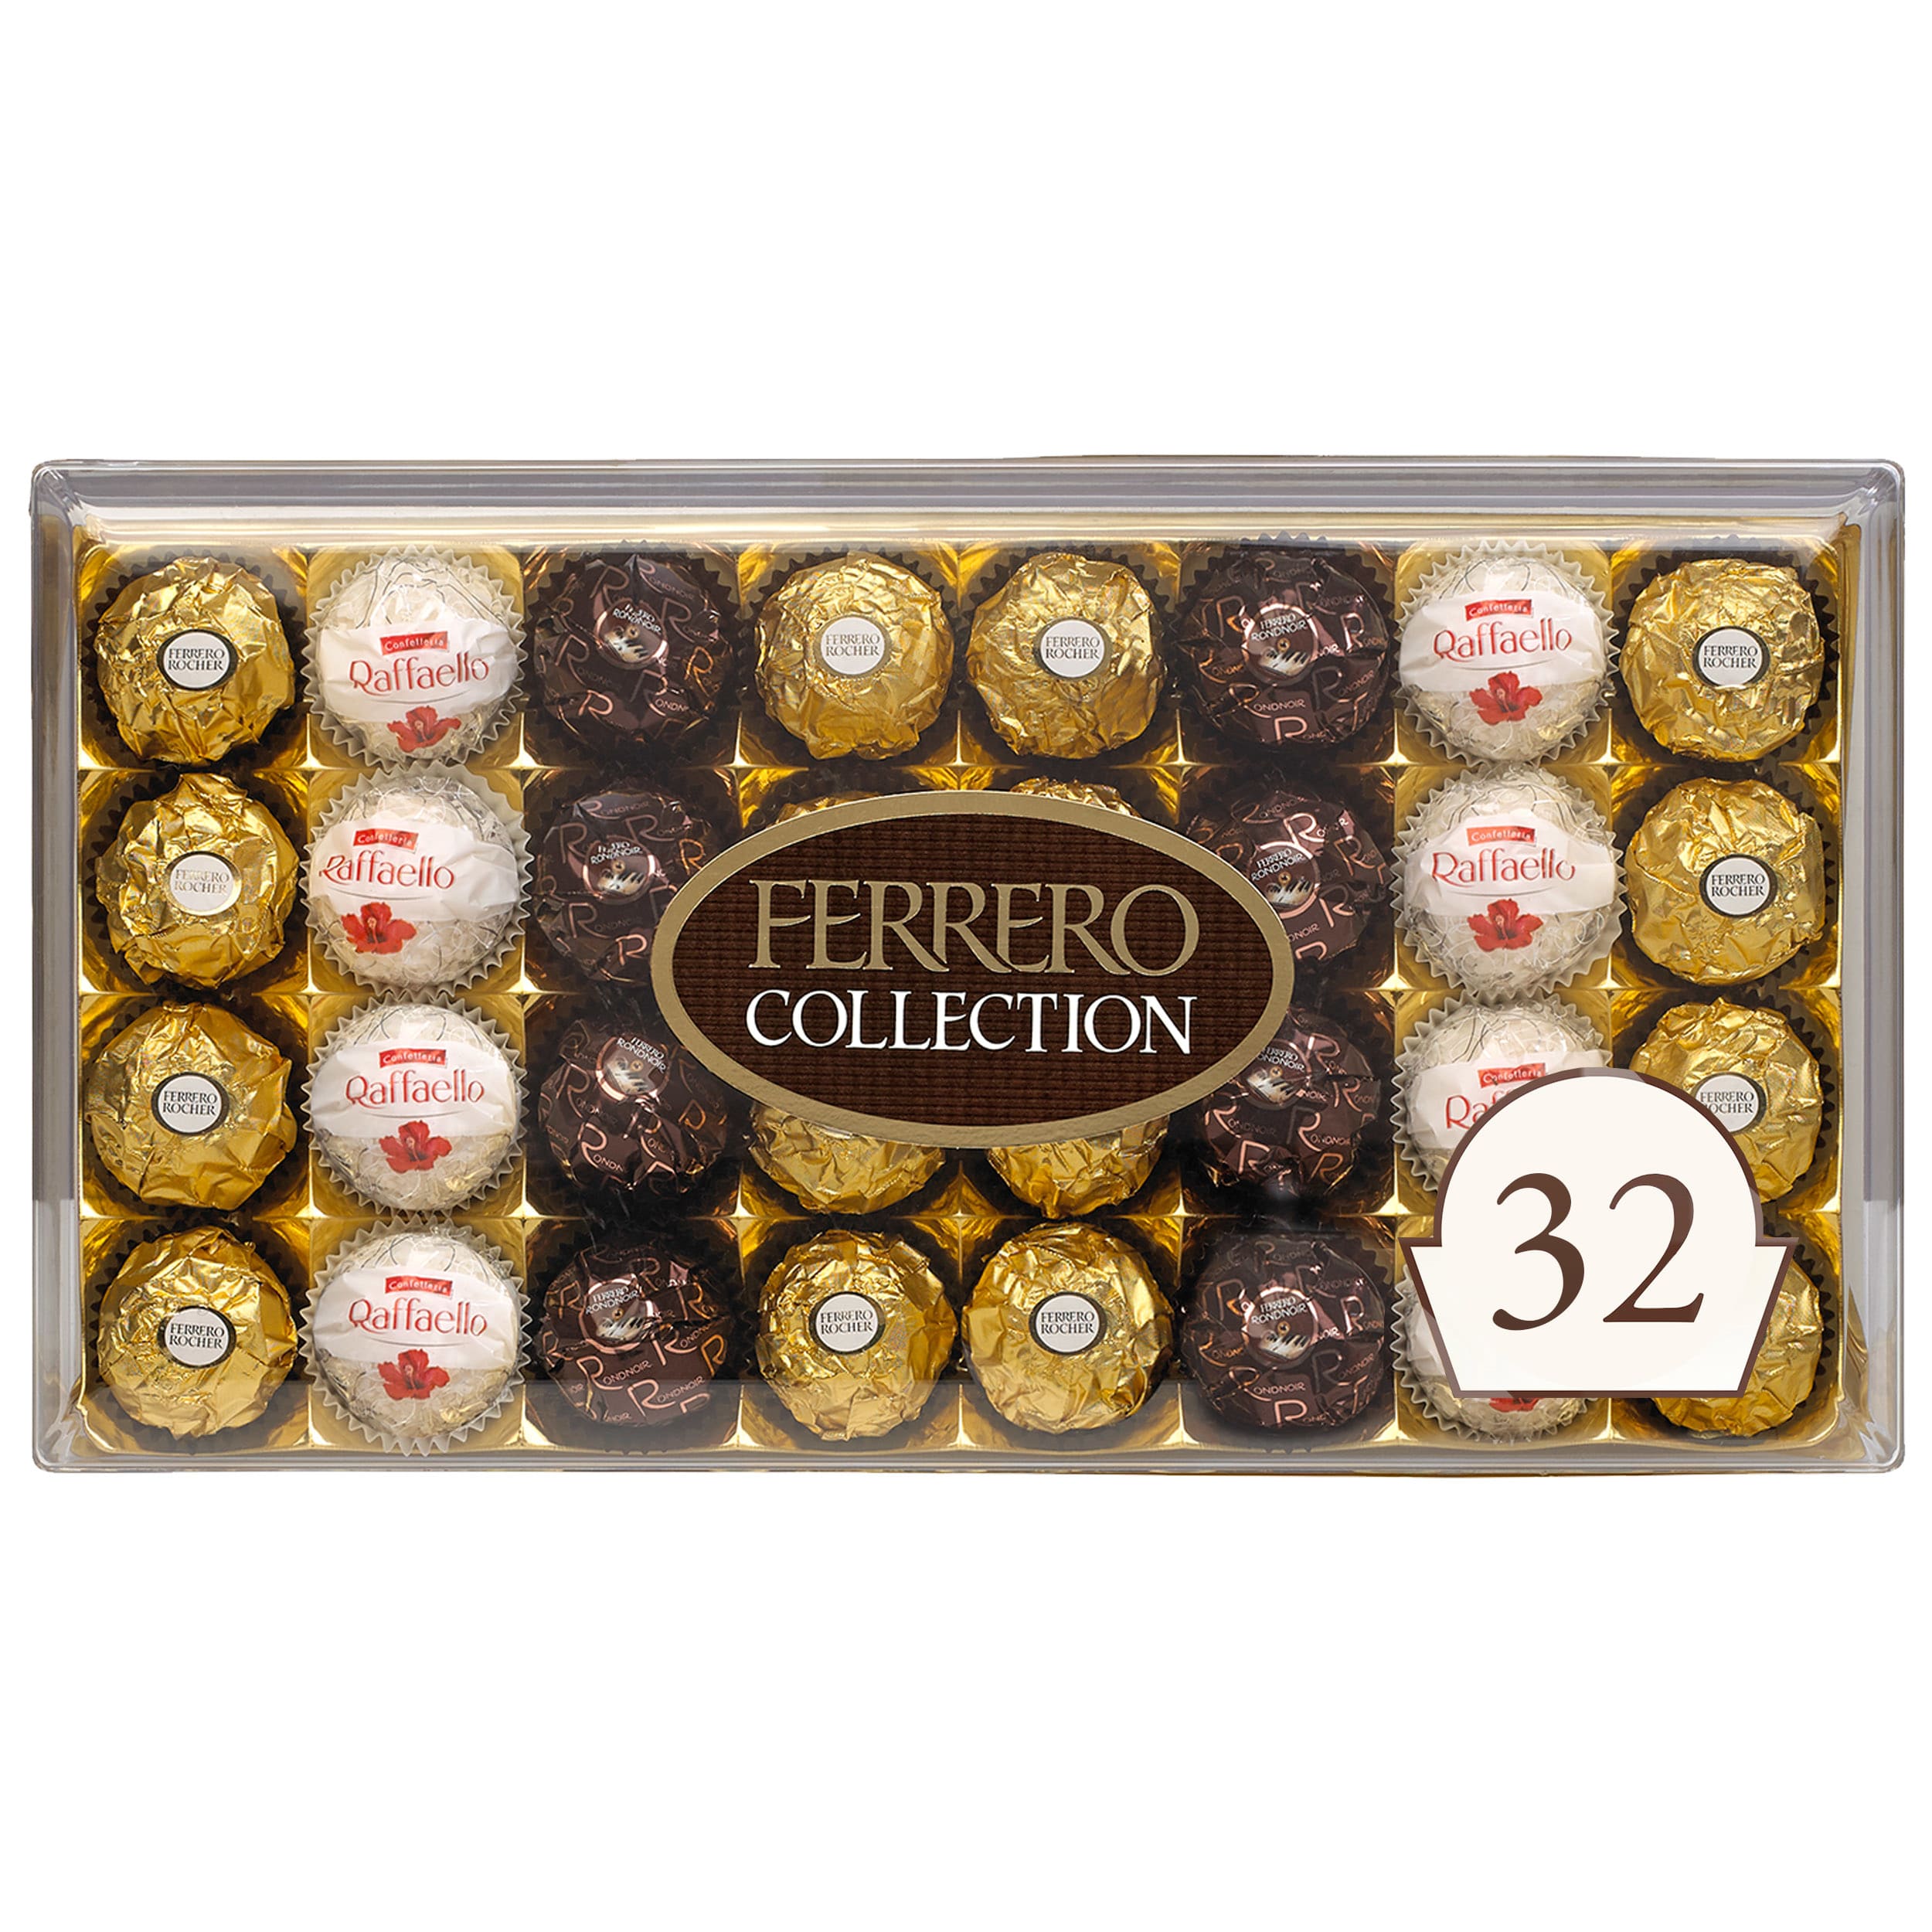 Ferrero Collection, Milk and Dark Chocolate and Coconut, Luxury Chocolate Gift Box, 32 Ct - image 1 of 11